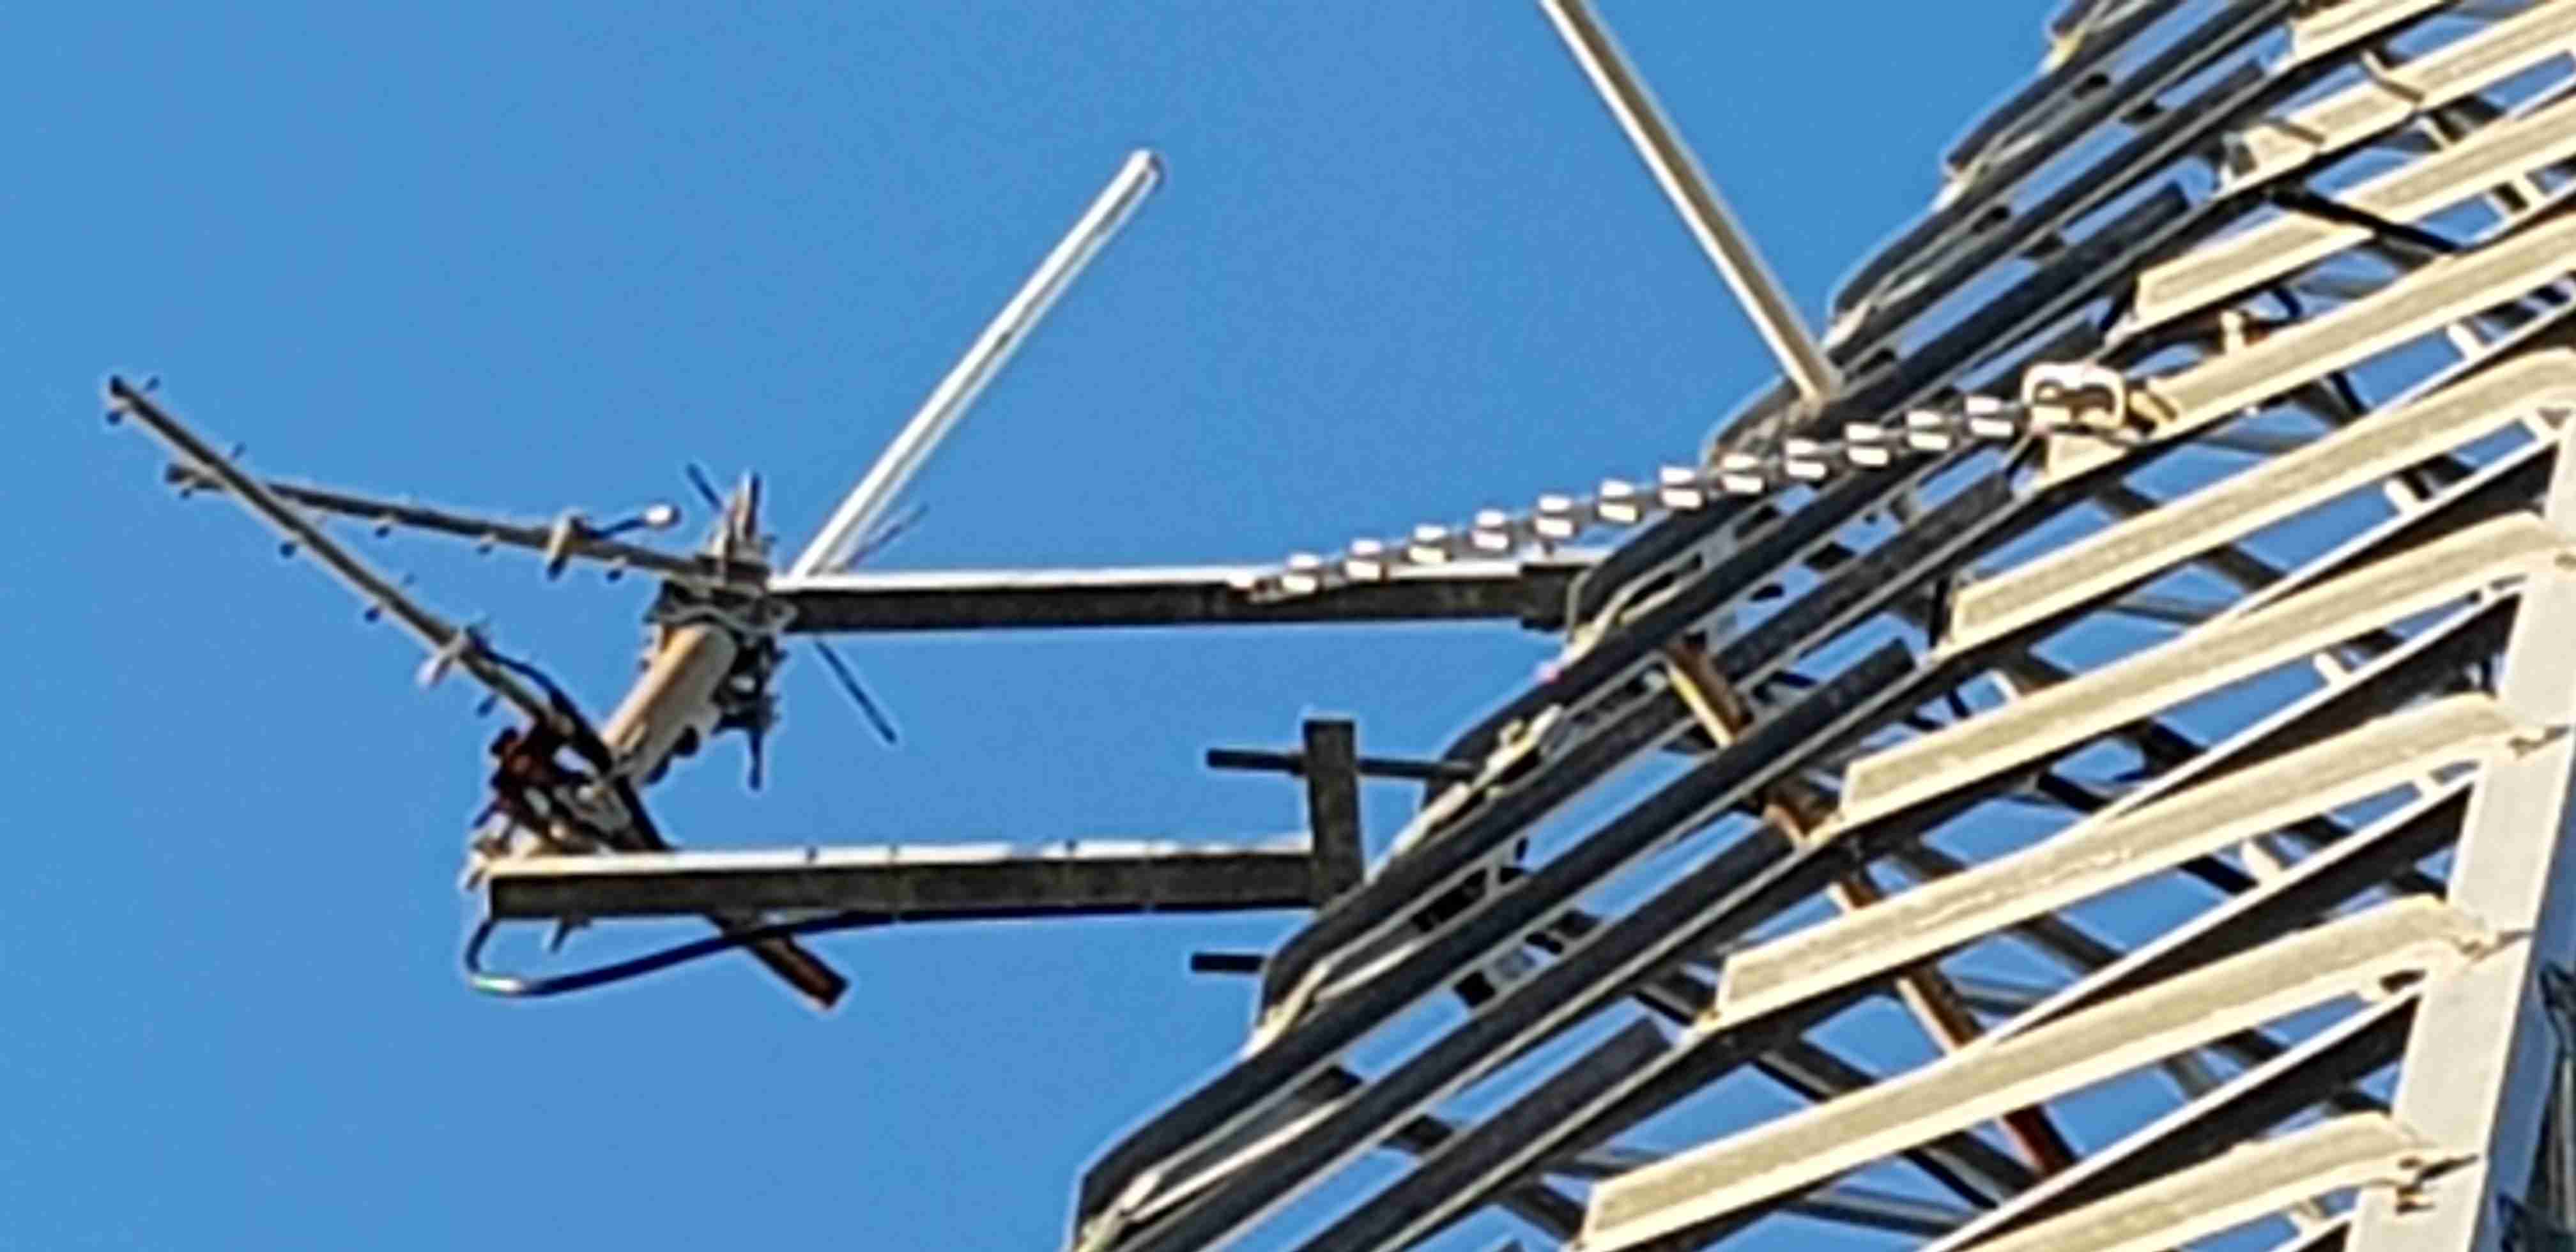 Antennas-2018-08-03-16.42.29